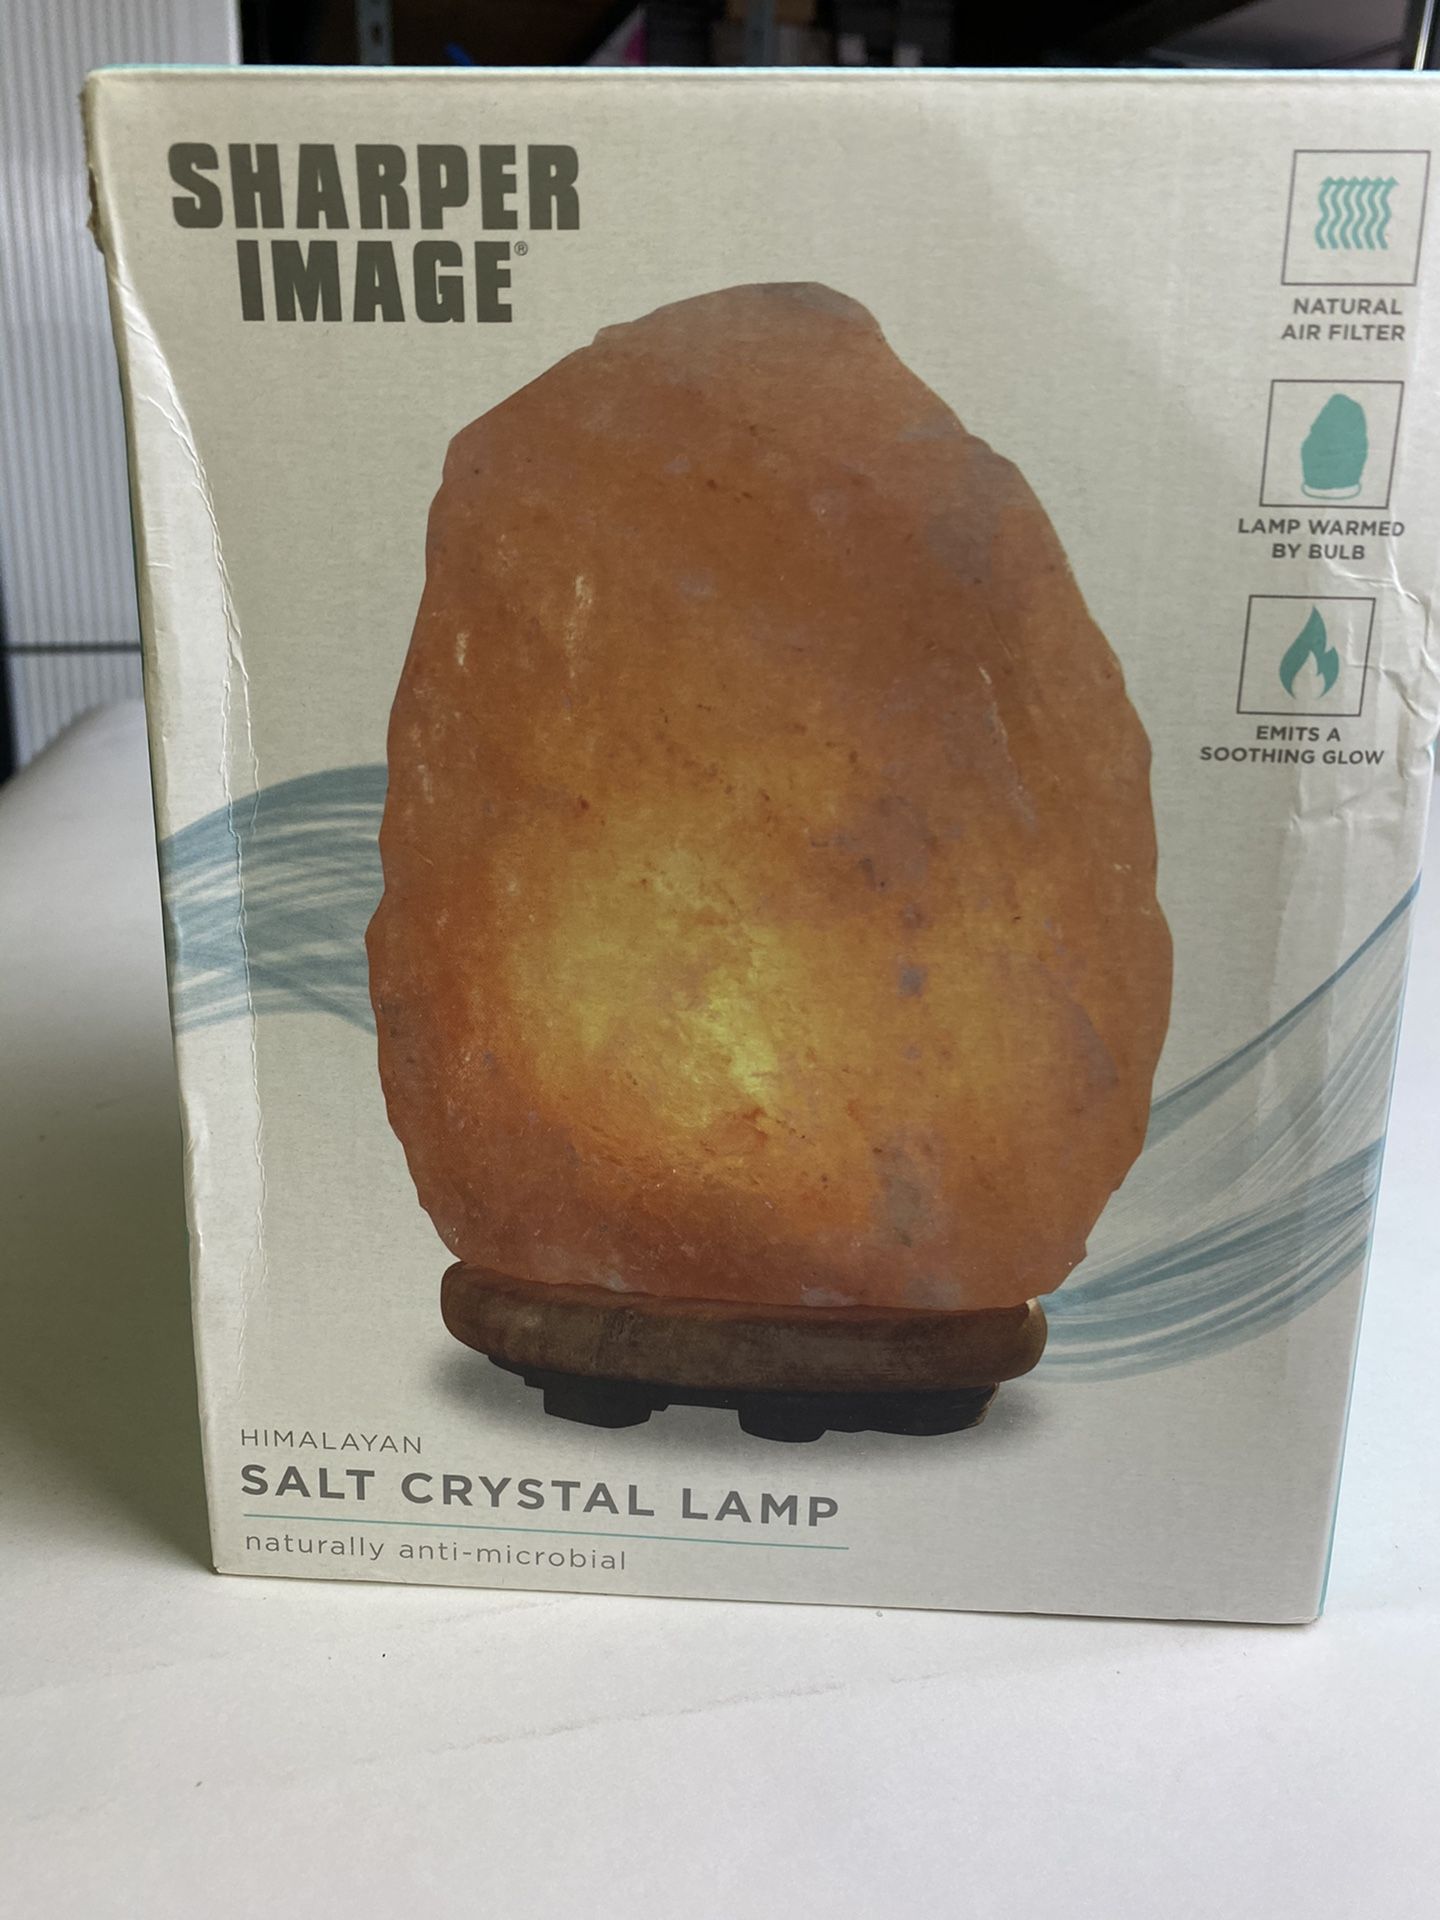 Salt Crystal lamp